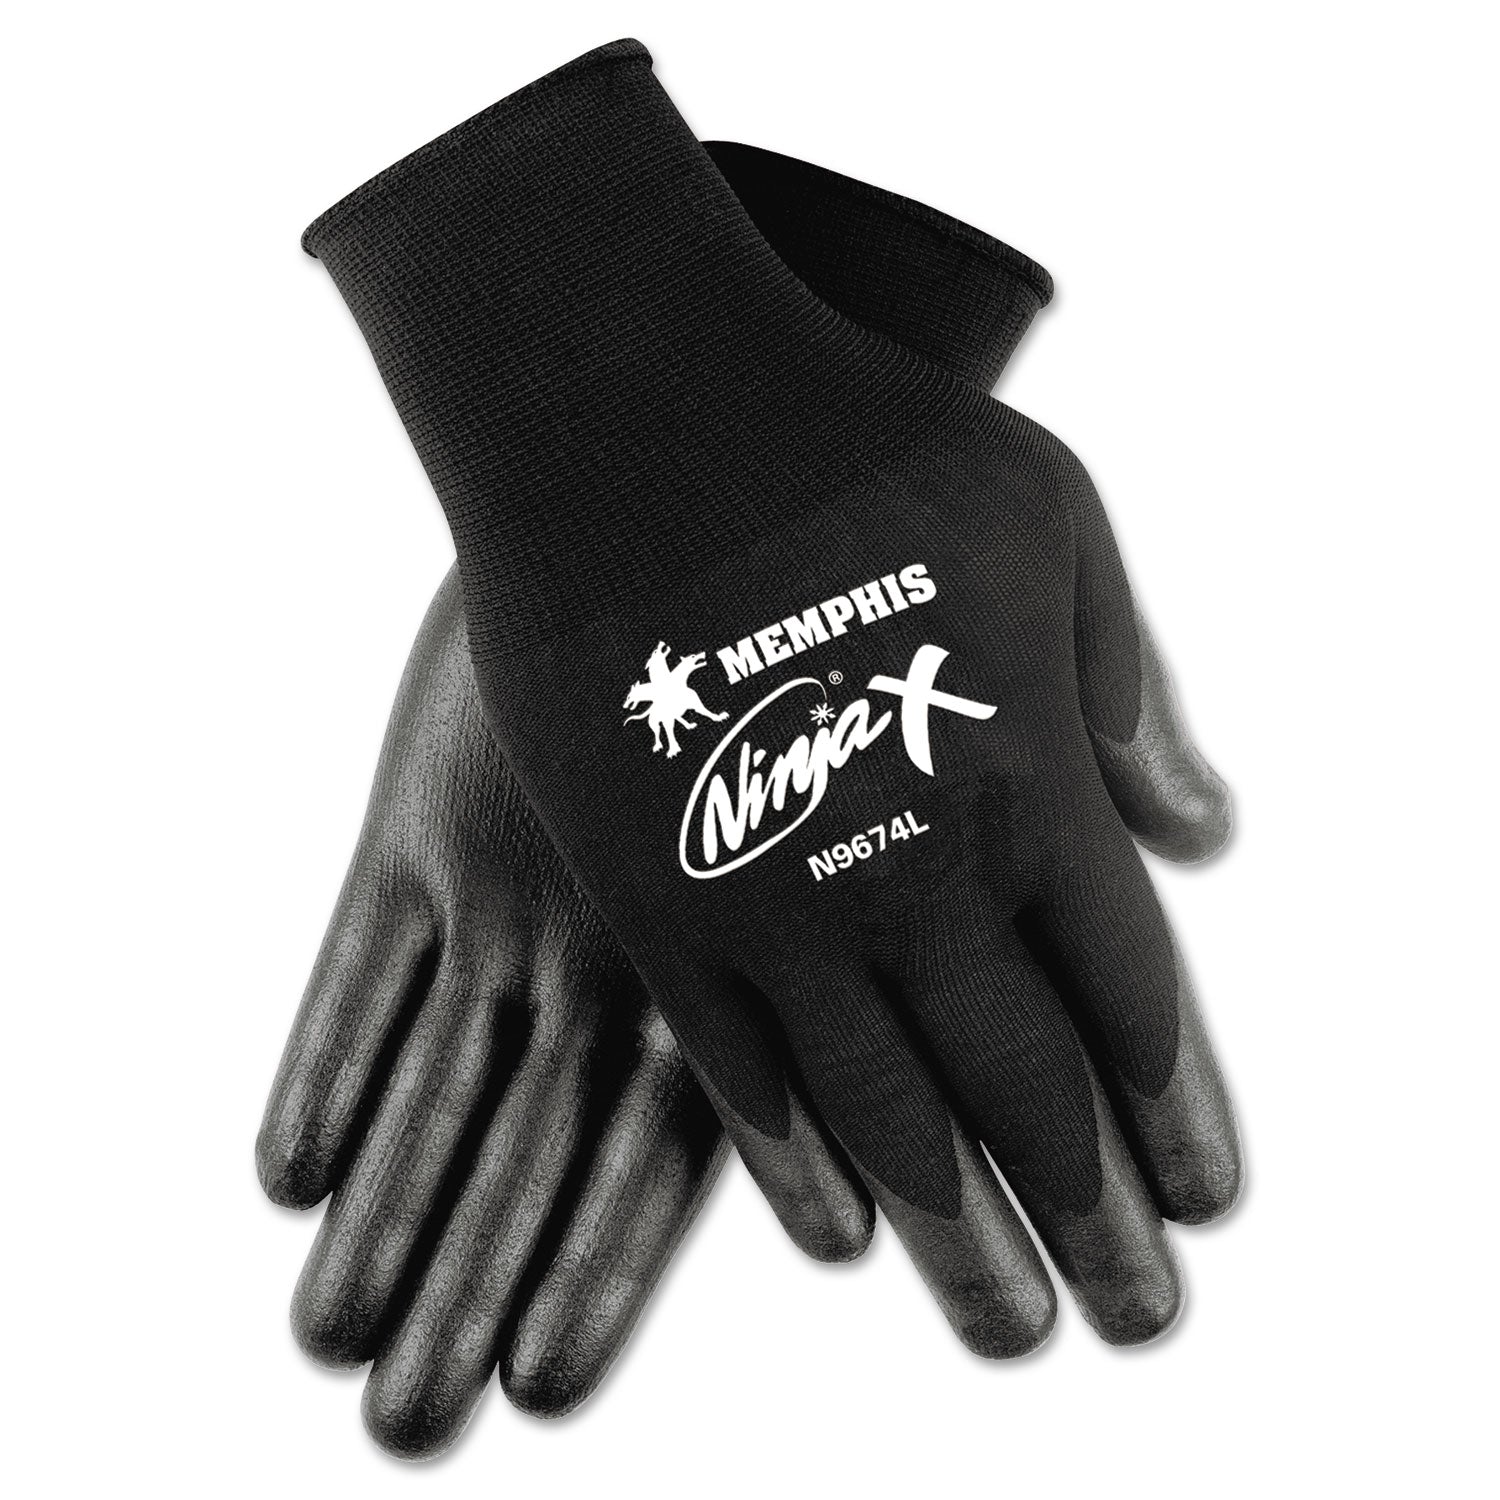 Ninja x Bi-Polymer Coated Gloves, Large, Black, Pair - 